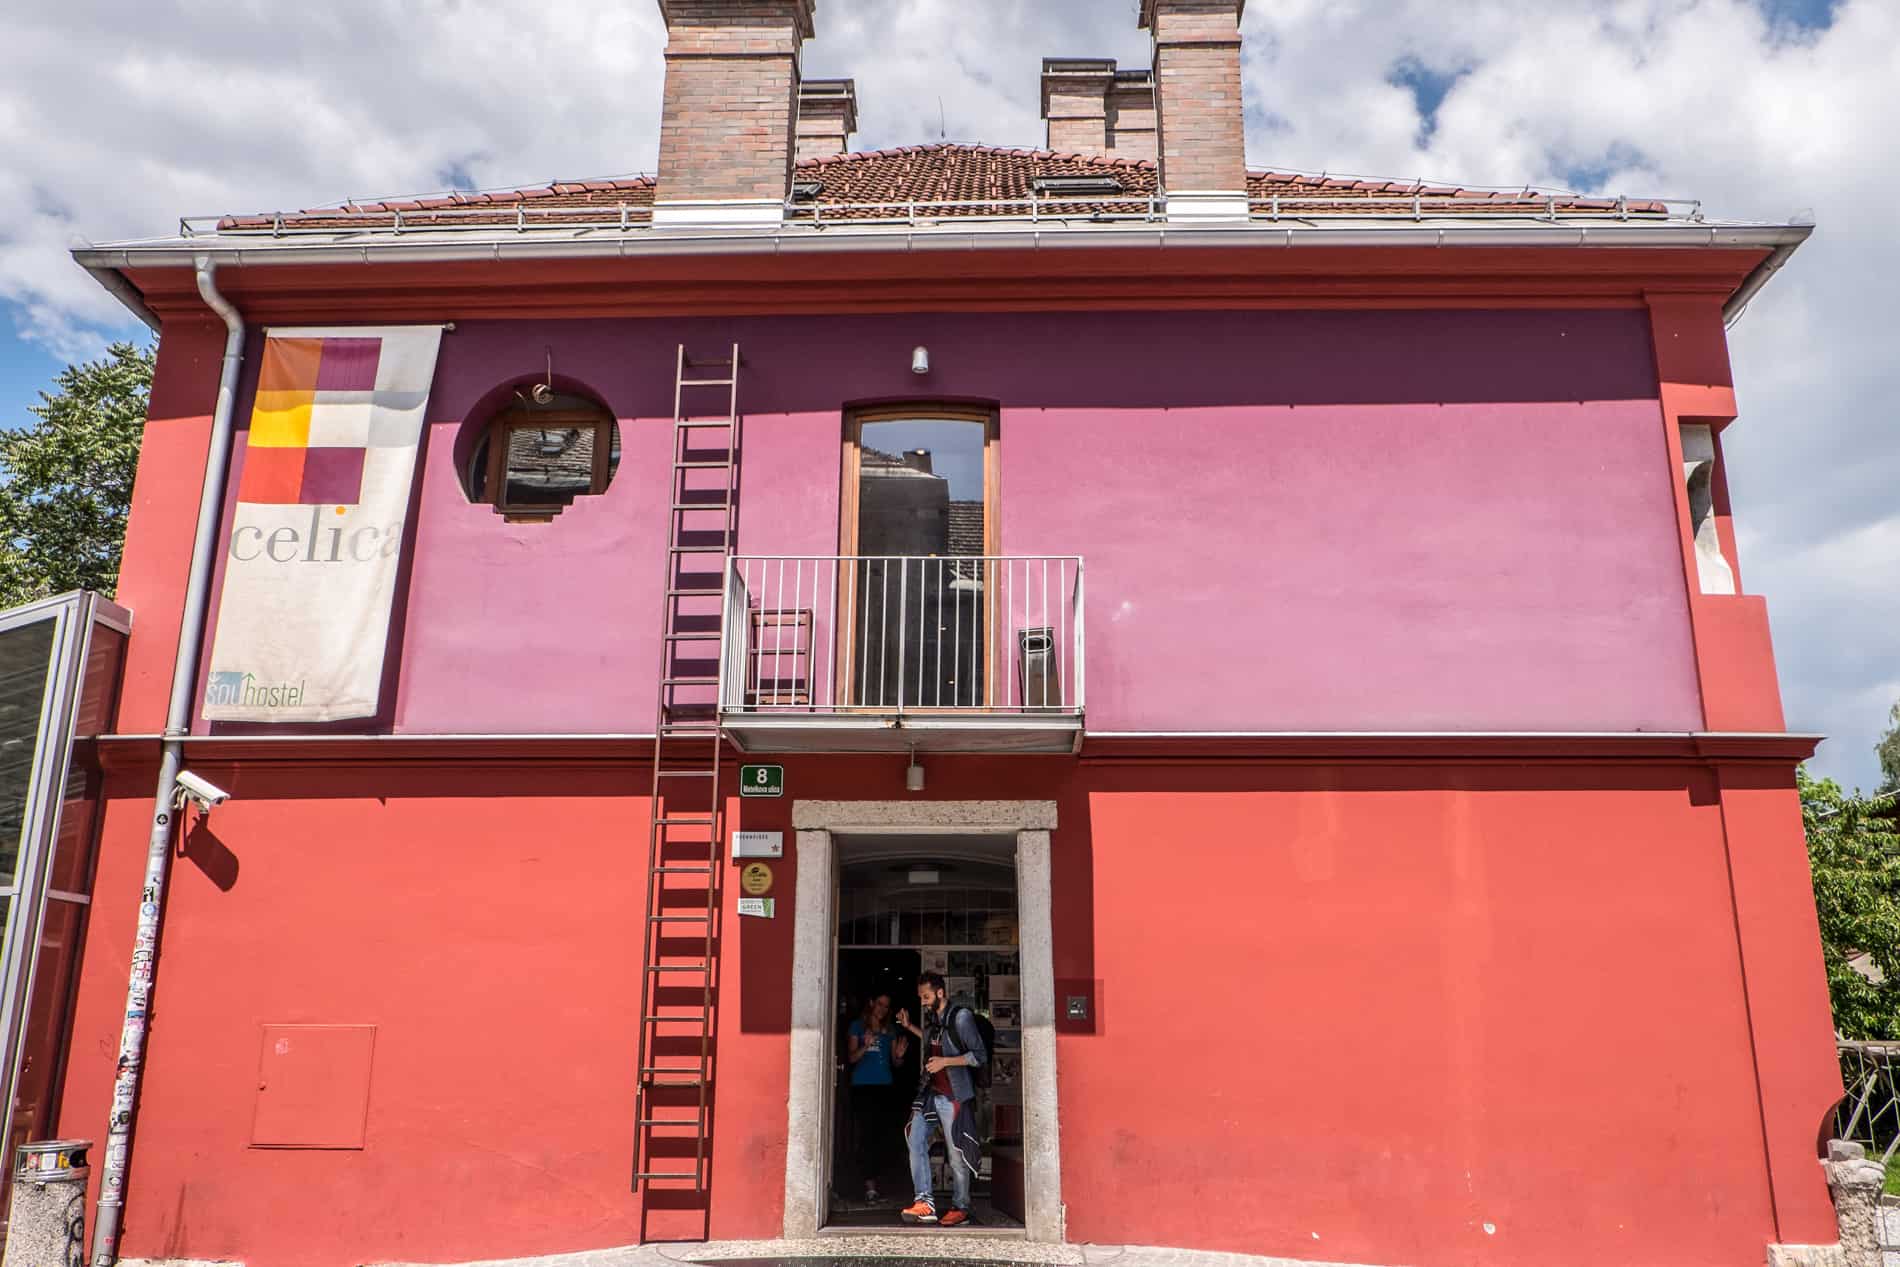 The pink and red building is a former prison turned Hostel Celica in Metelkova, Ljubljana.